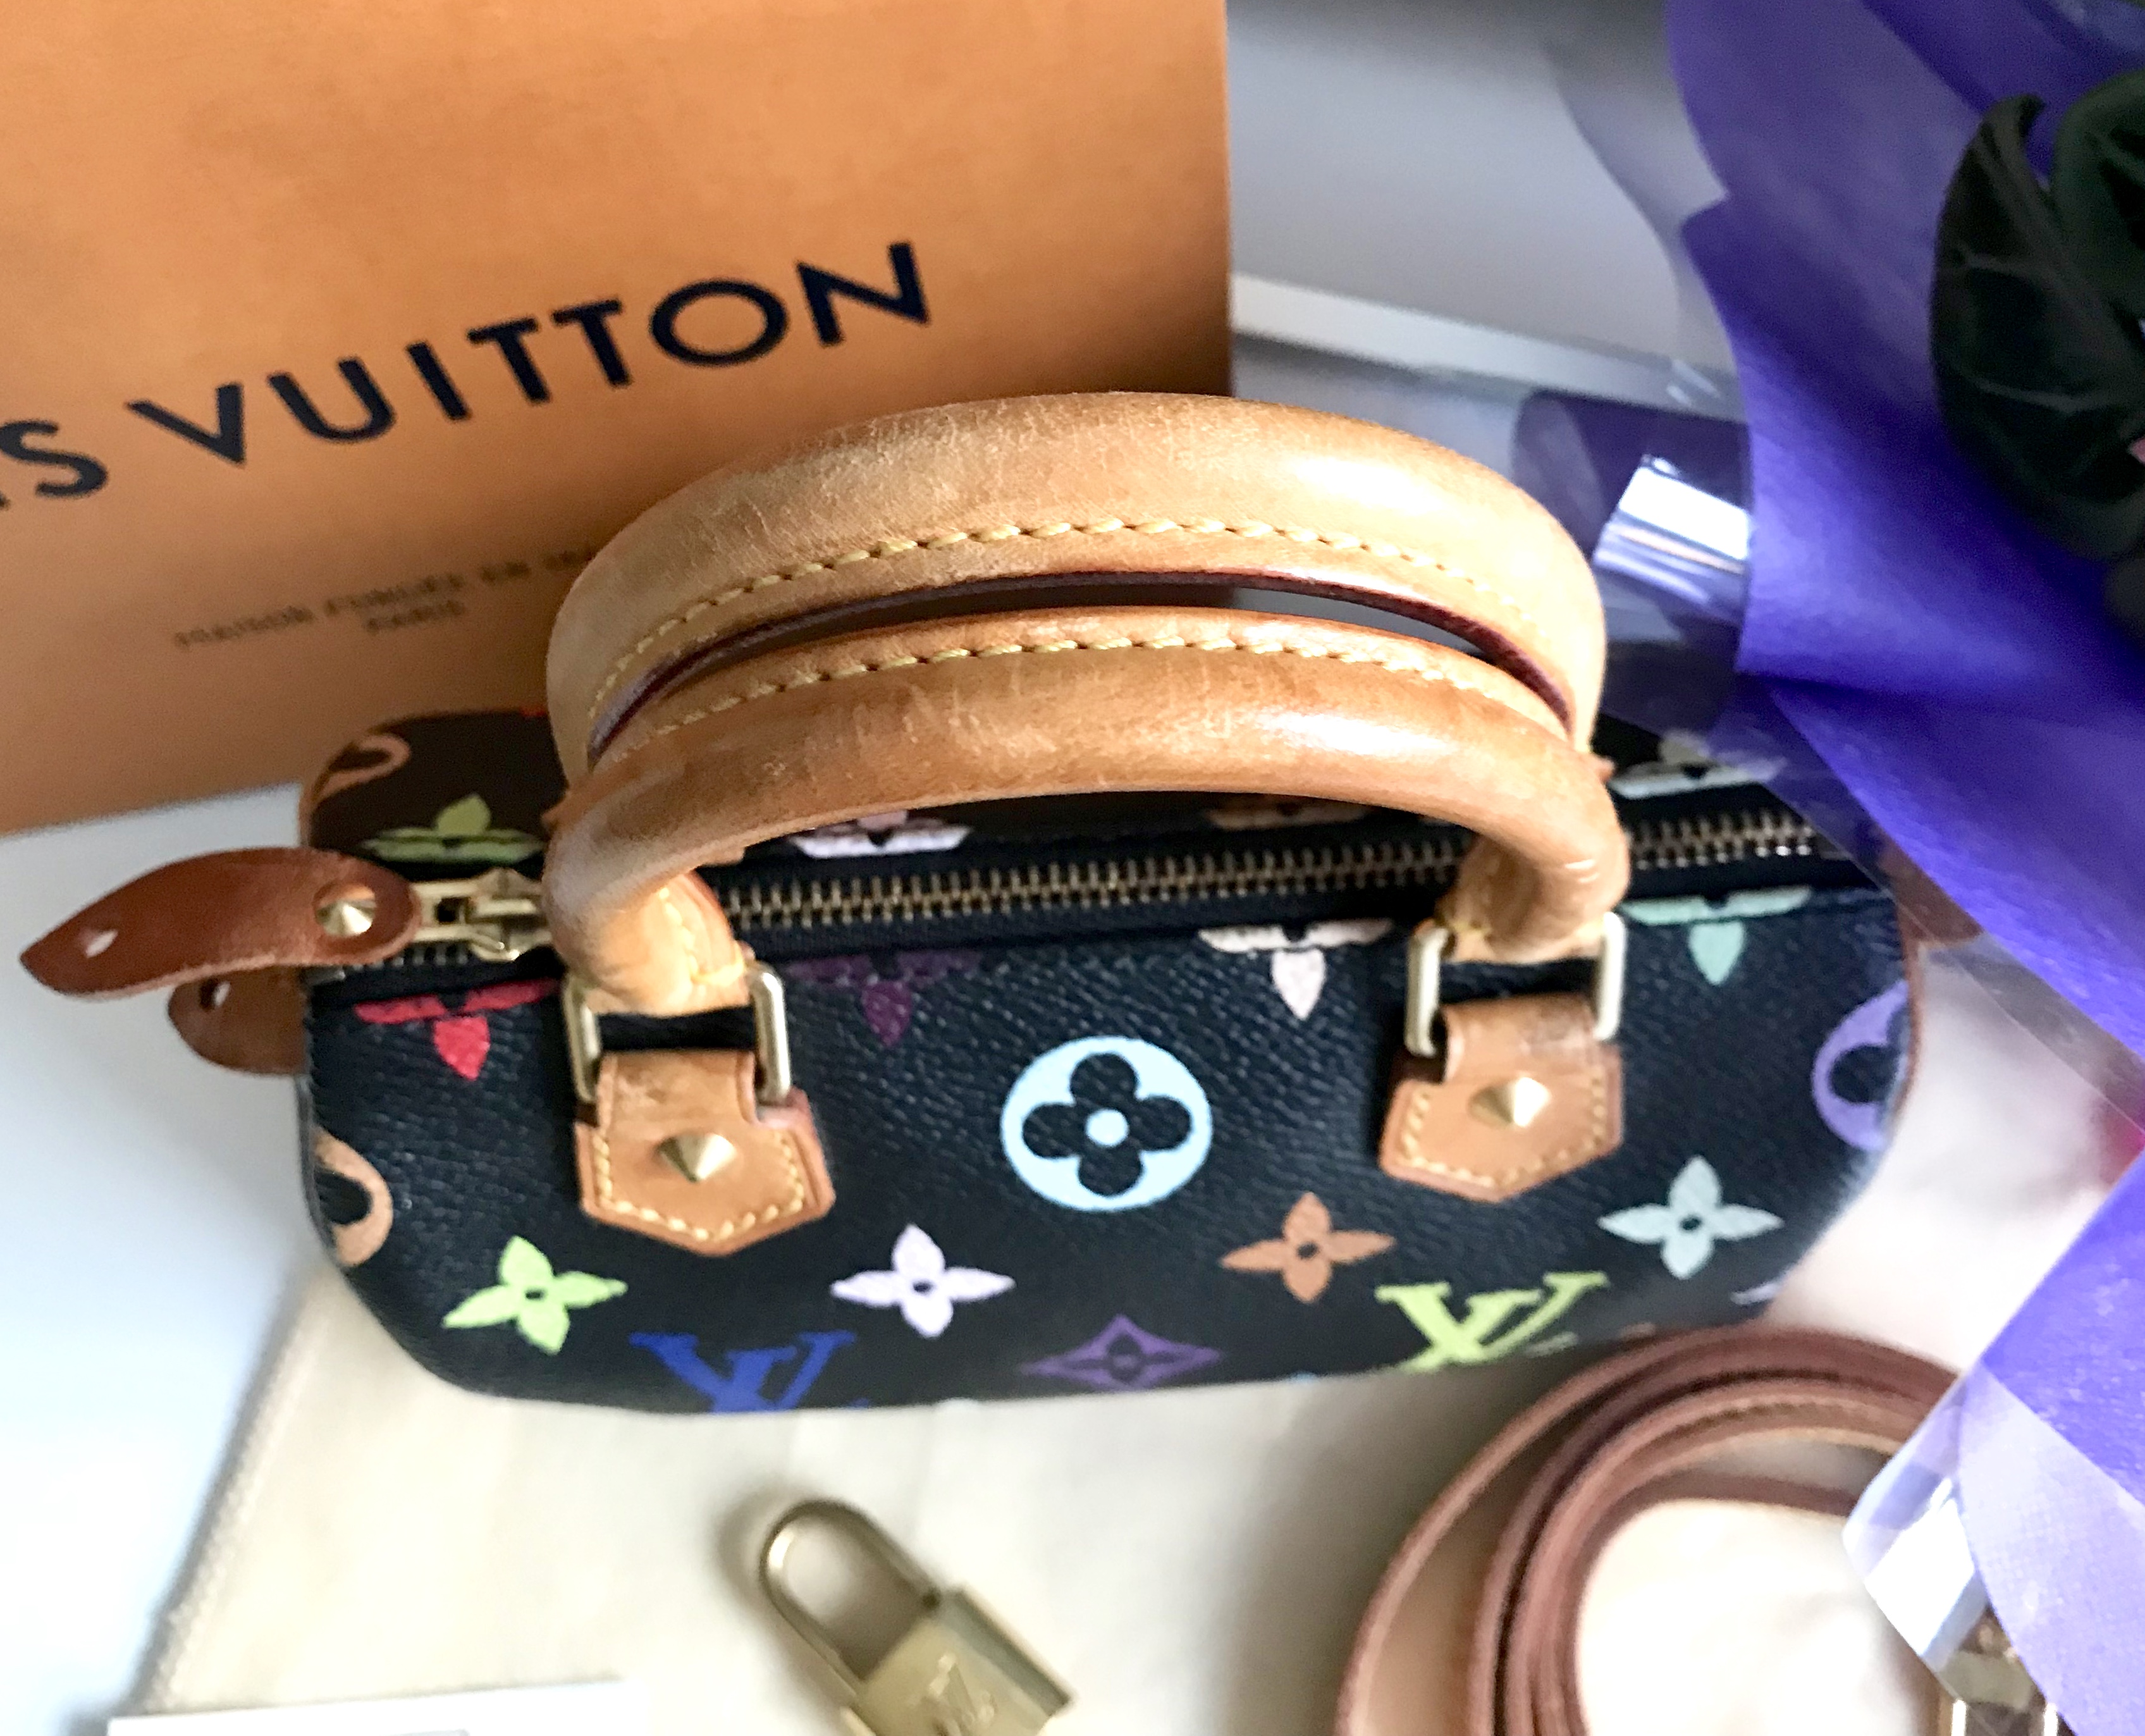 Nano noé handbag Louis Vuitton Multicolour in Plastic - 35056367